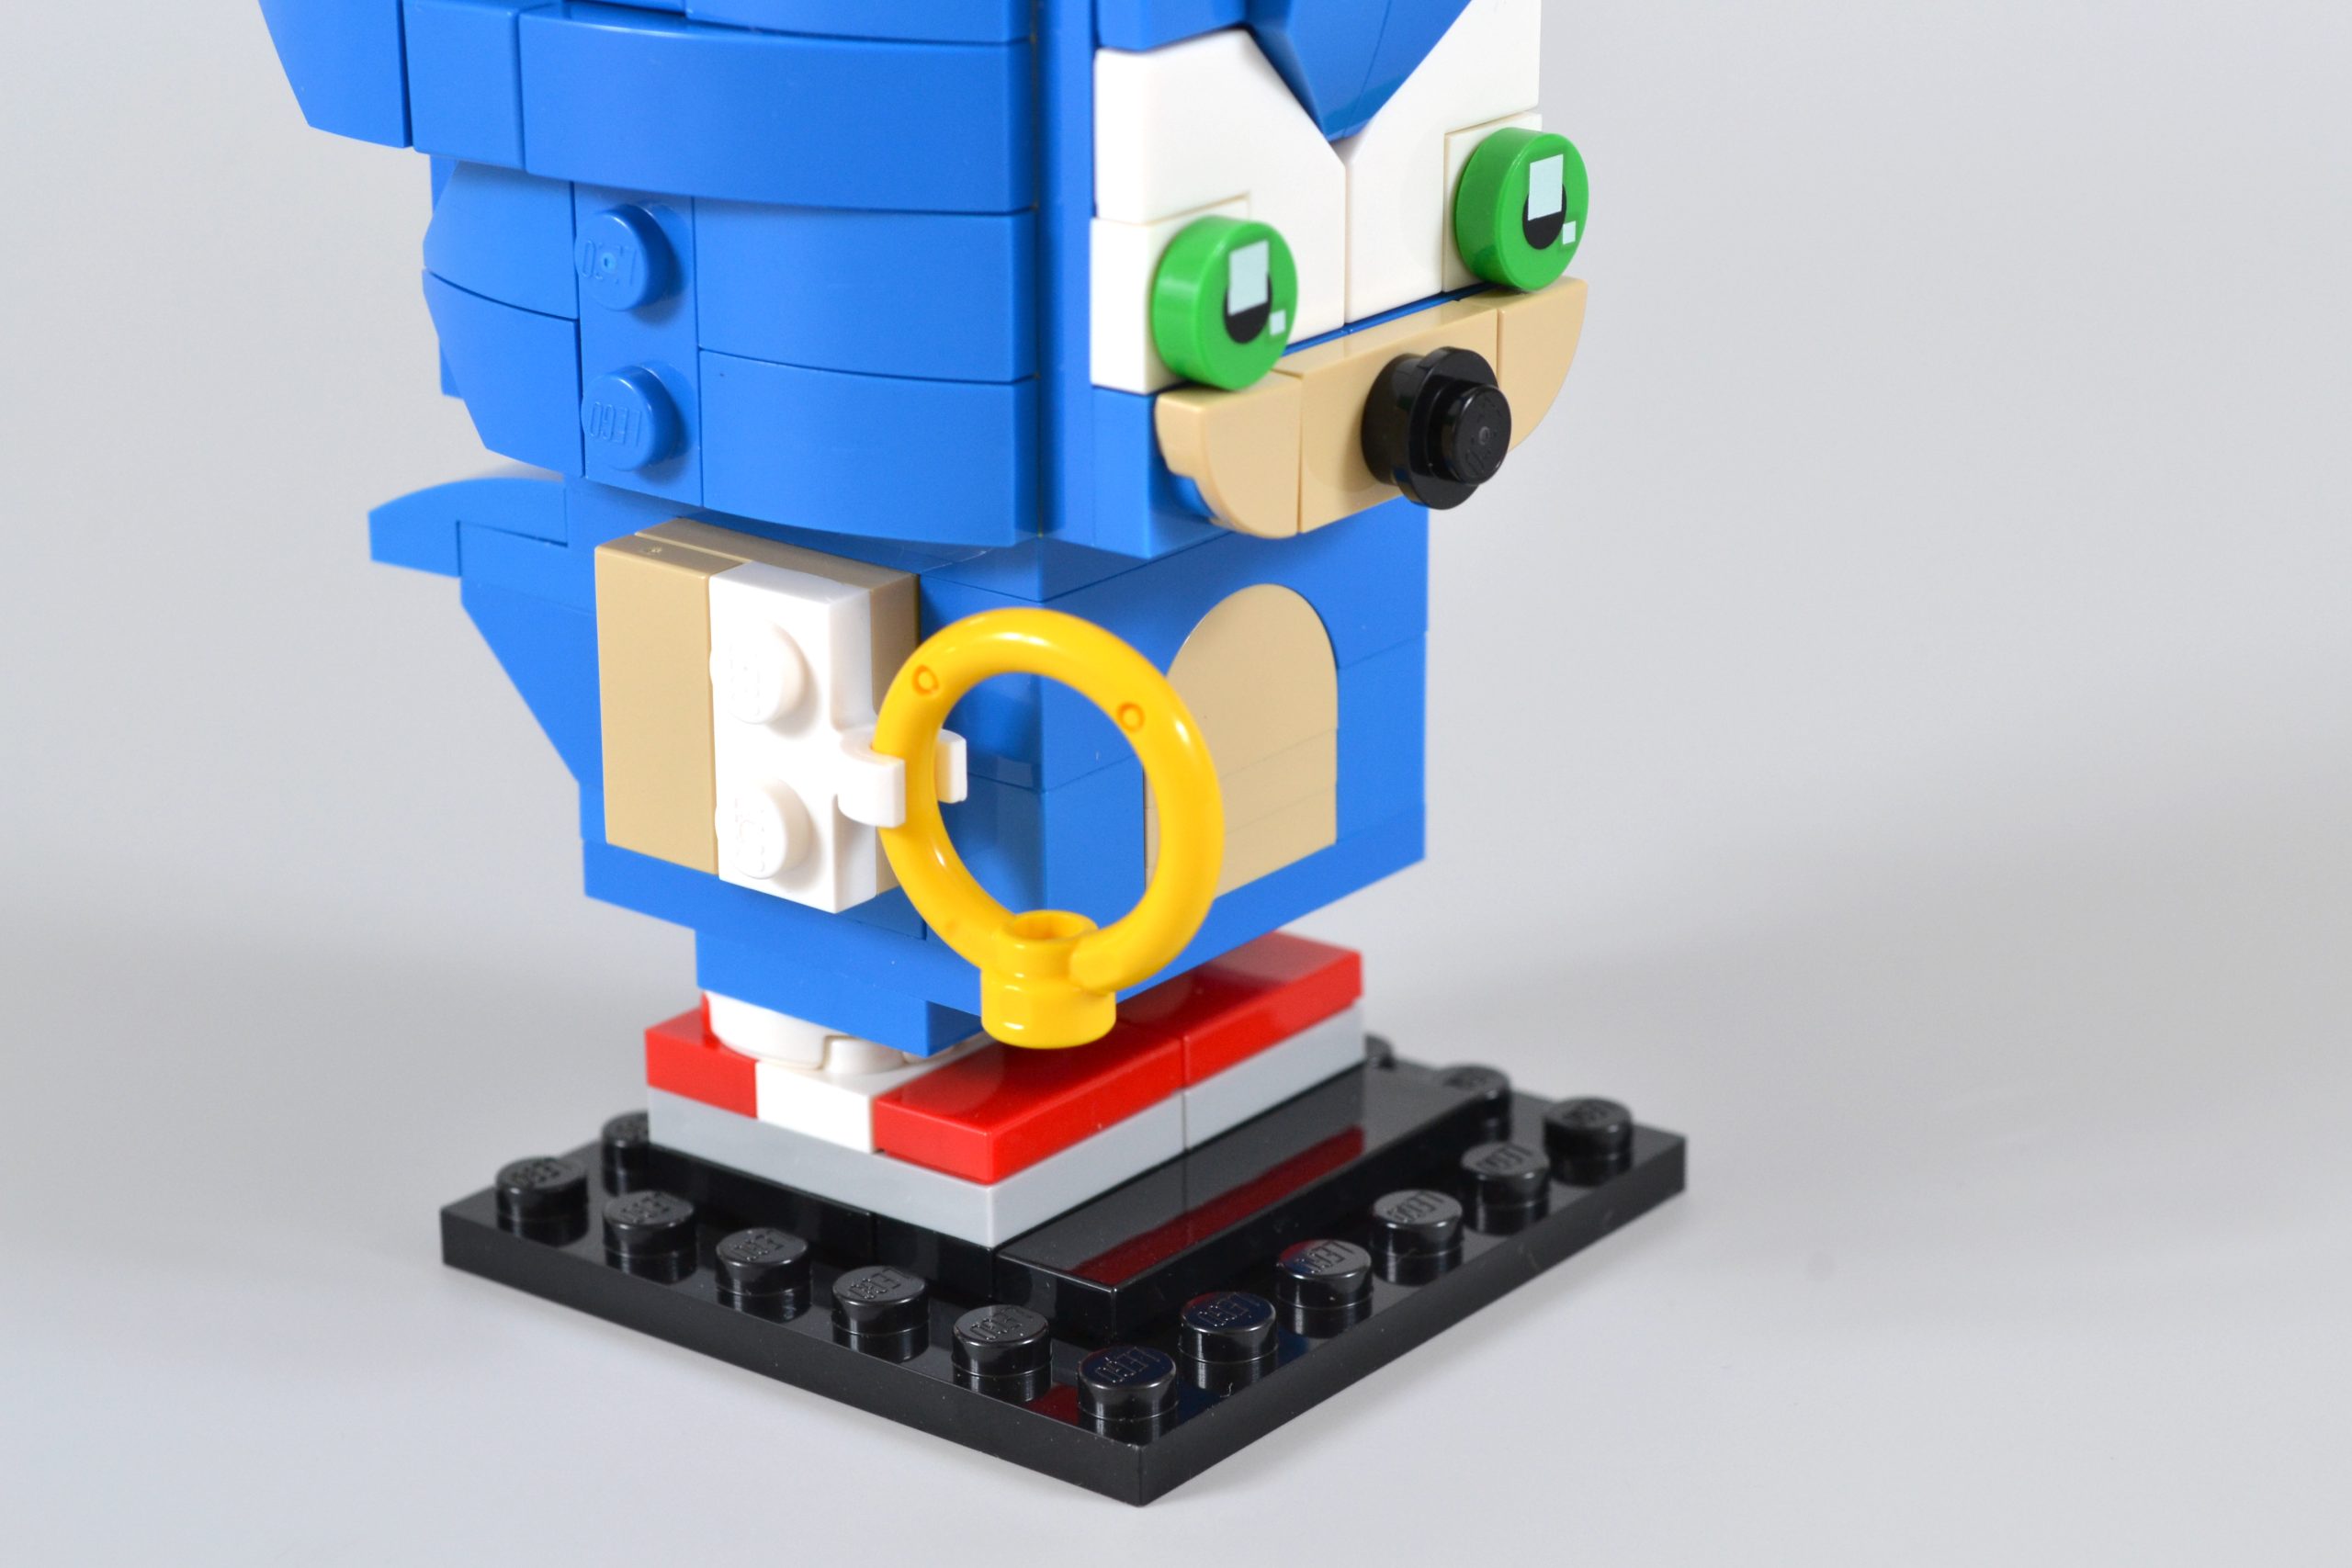 ▻ New LEGO BrickHeadz 2023 releases: 40627 Sonic the Hedgehog and